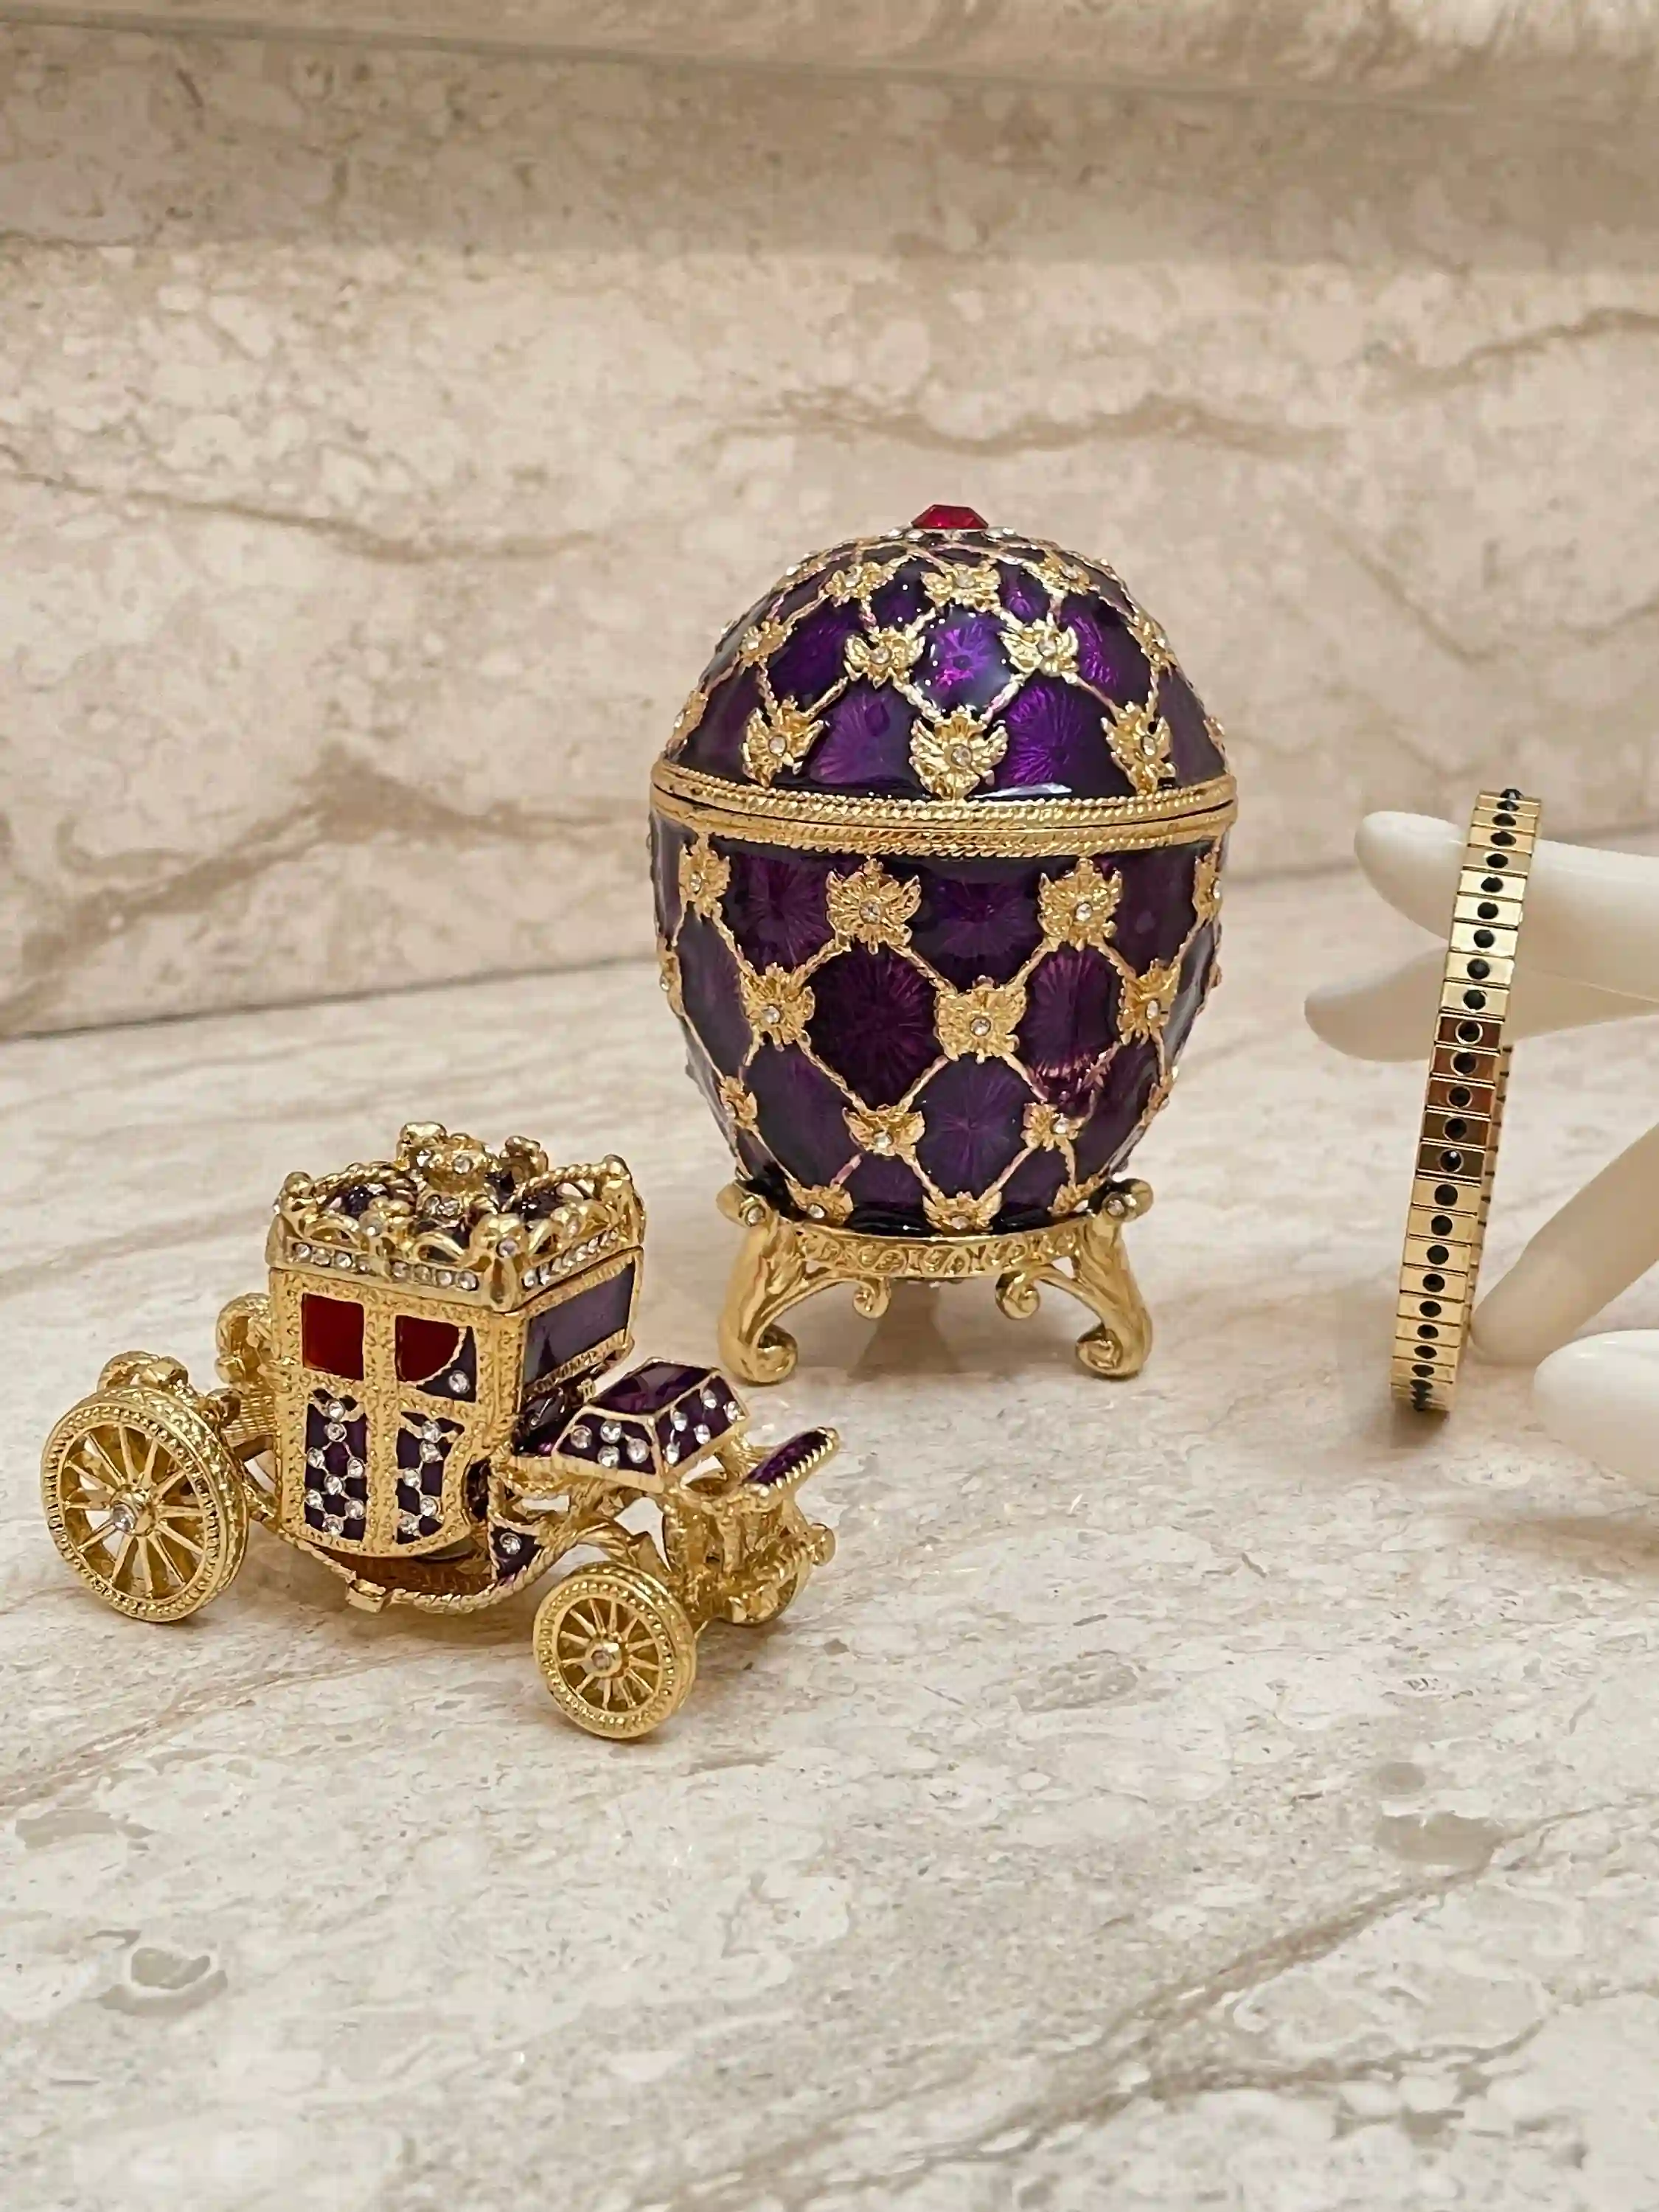 Amethyst Faberge egg EMPEROR Faberge style Egg Guilloche Enamel Boyfriend Grad Gift for him 24k GOLD Austrian Crystal HANDSET Home decor 